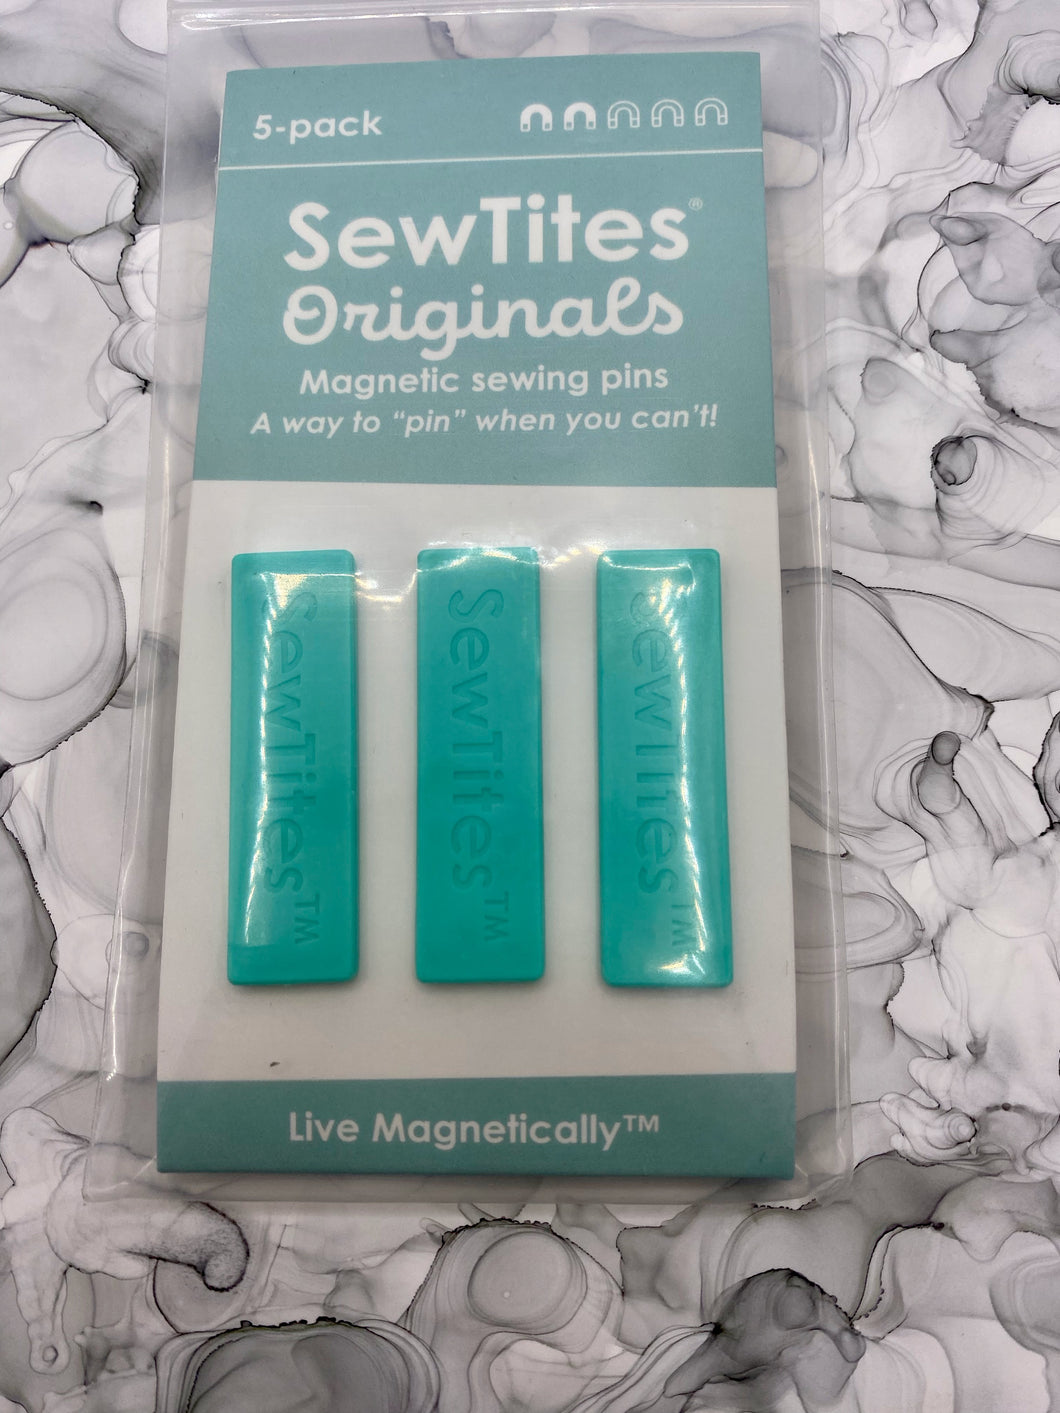 SewTites Originals - Magnetic sewing pins